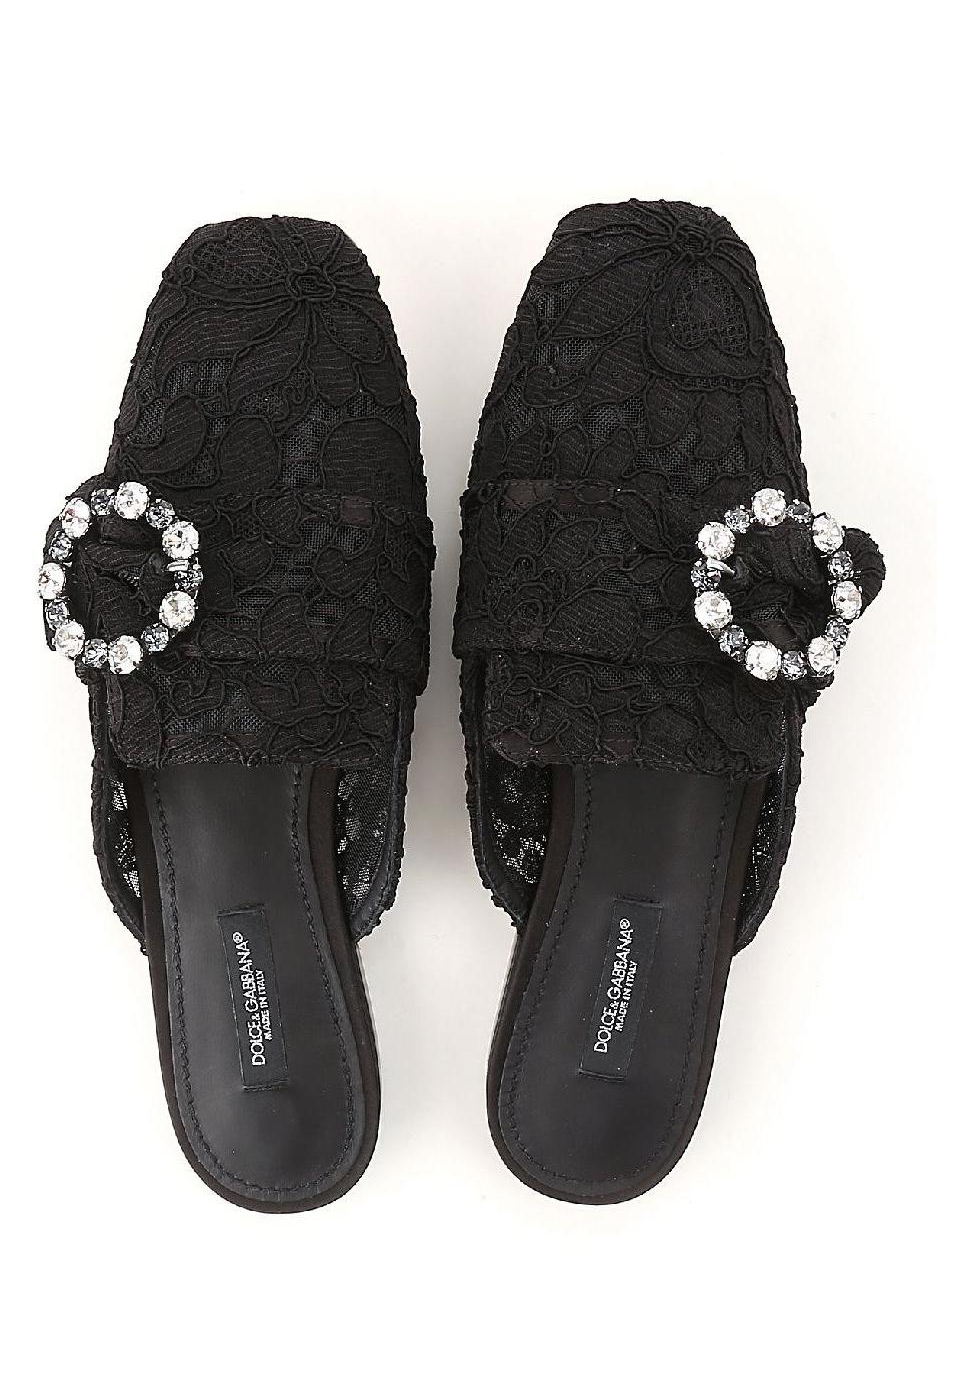 Dolce&Gabbana women's close slippers in black satin - Italian Boutique